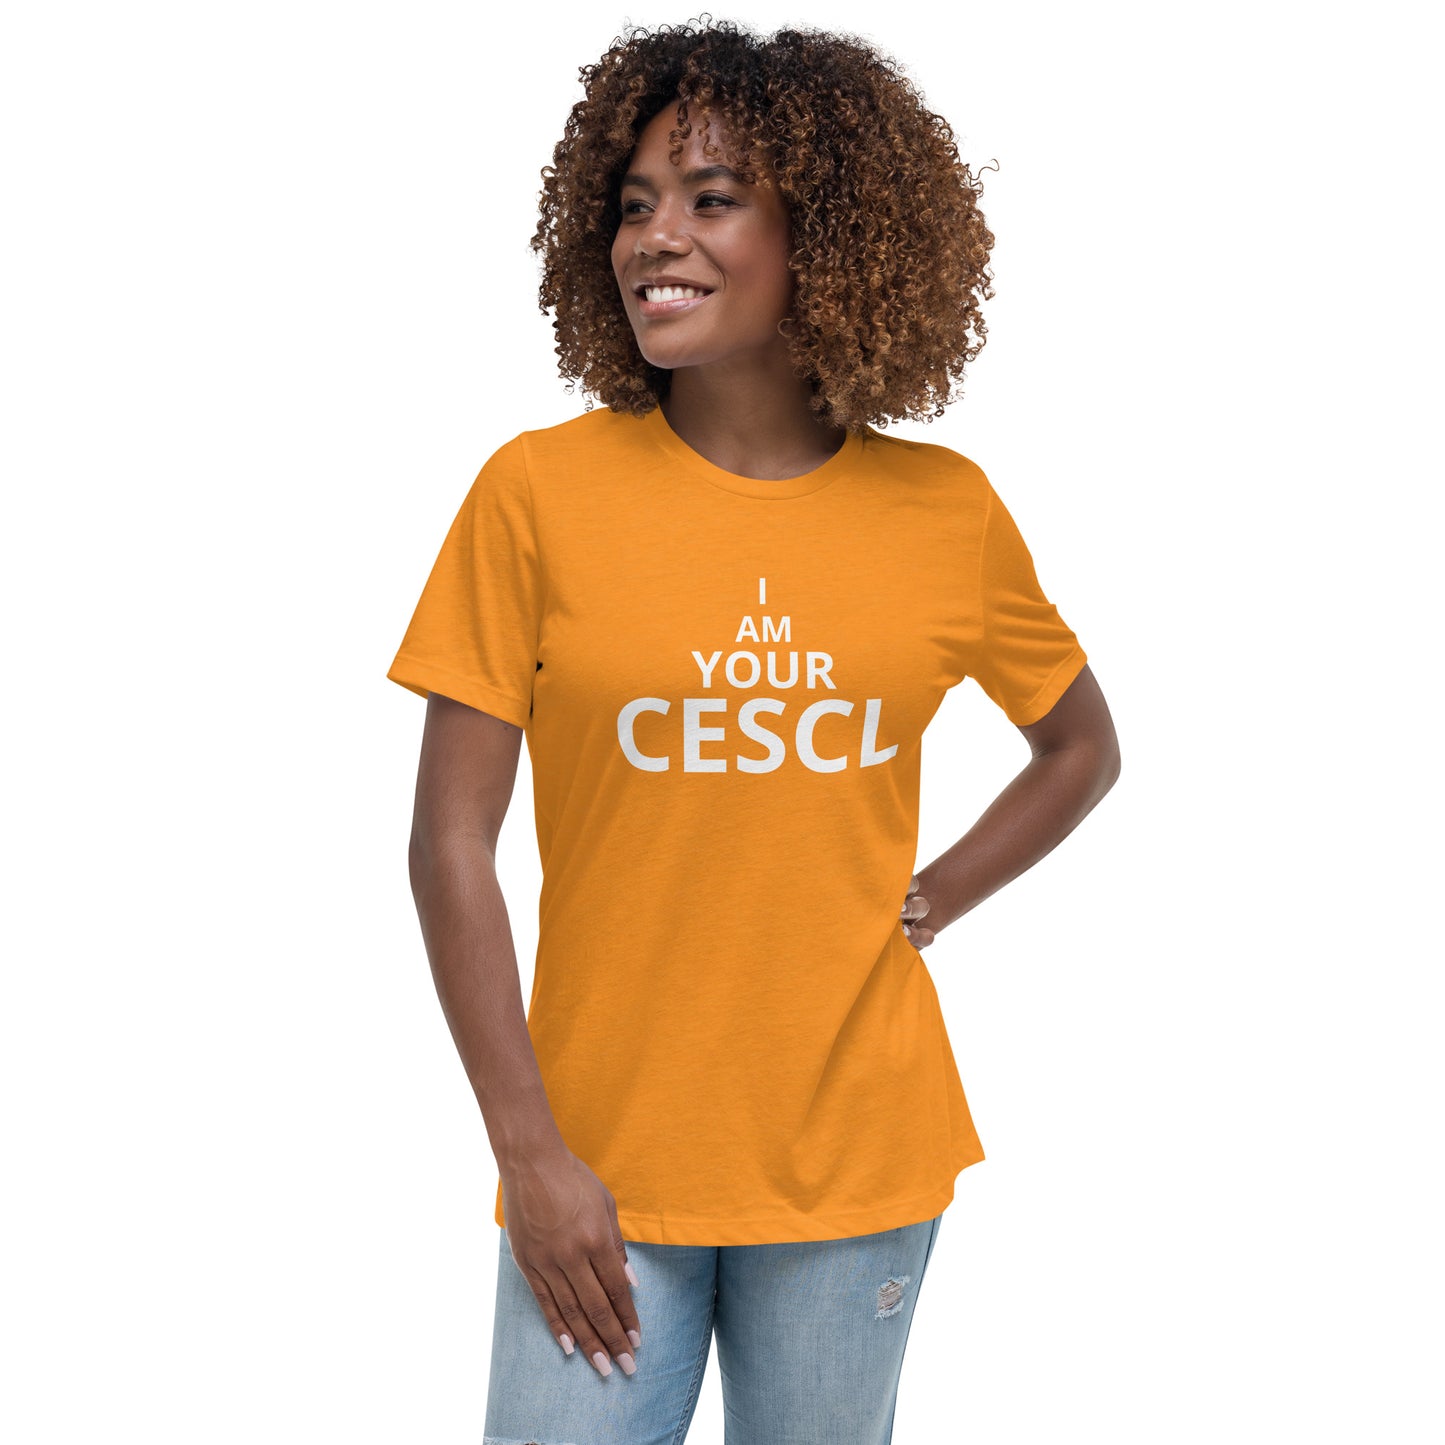 I am Your CESCL - Women's Relaxed T-Shirt